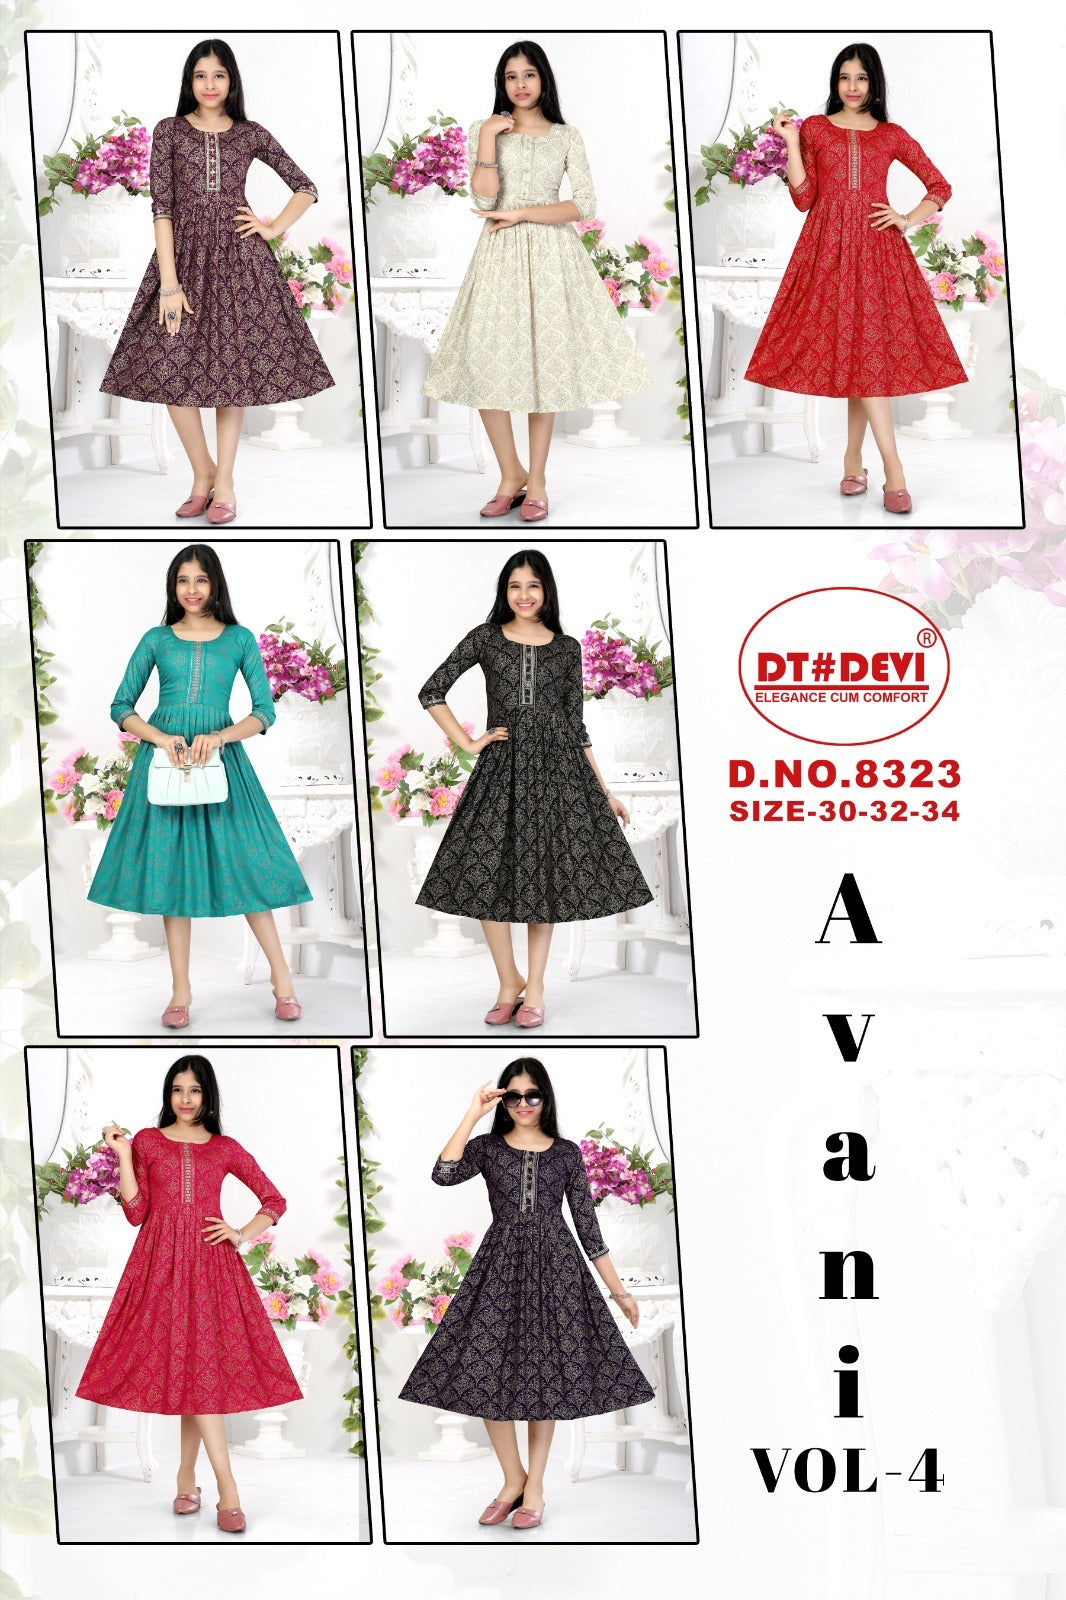 Avani Vol 4-8323 Dt Devi Rayon Girls Anarkali Kurti